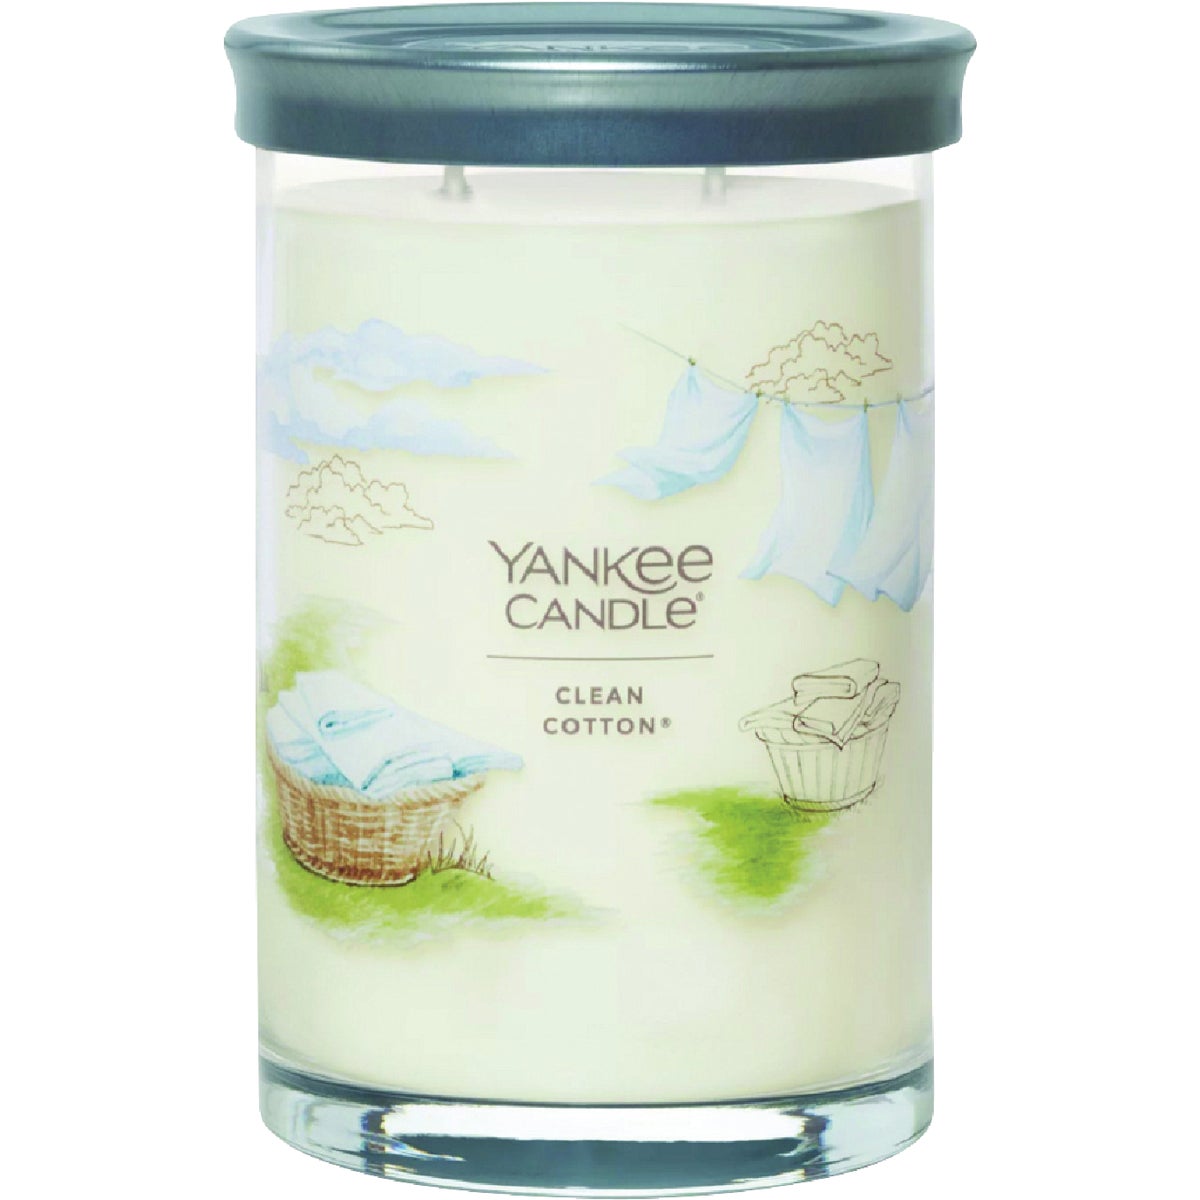 Yankee Candle 13 Oz. Clean Cotton Medium Jar Candle